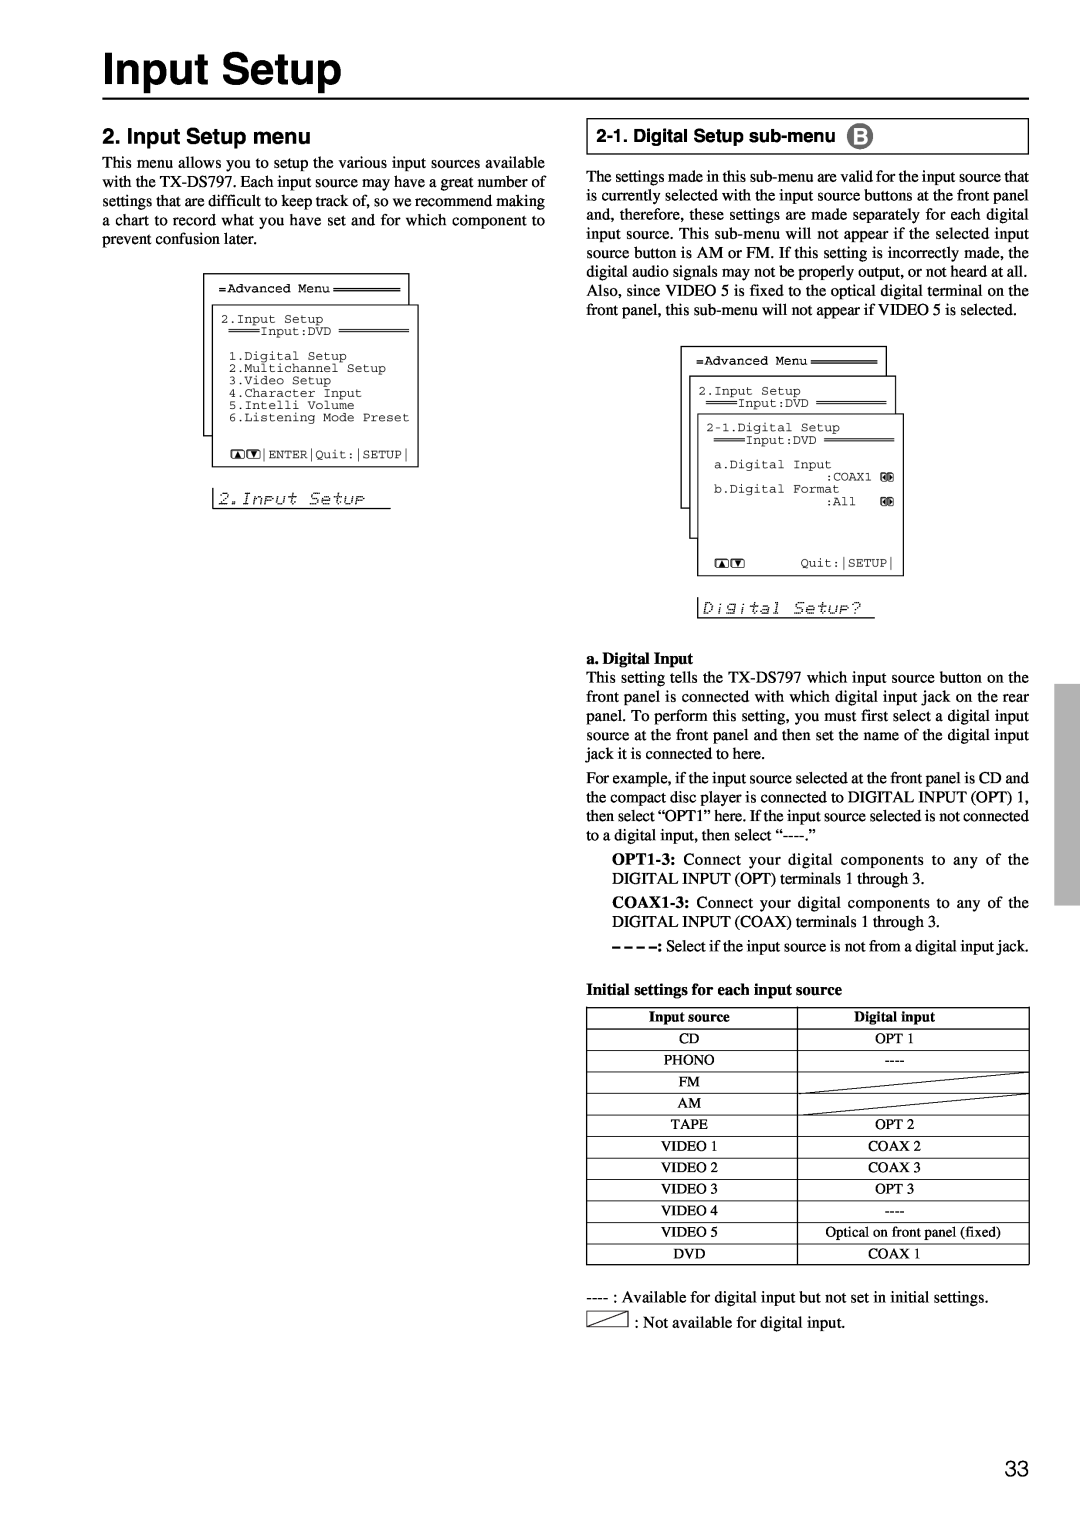 Onkyo TX-DS797 instruction manual Input Setup menu, Digital Setup sub-menu 